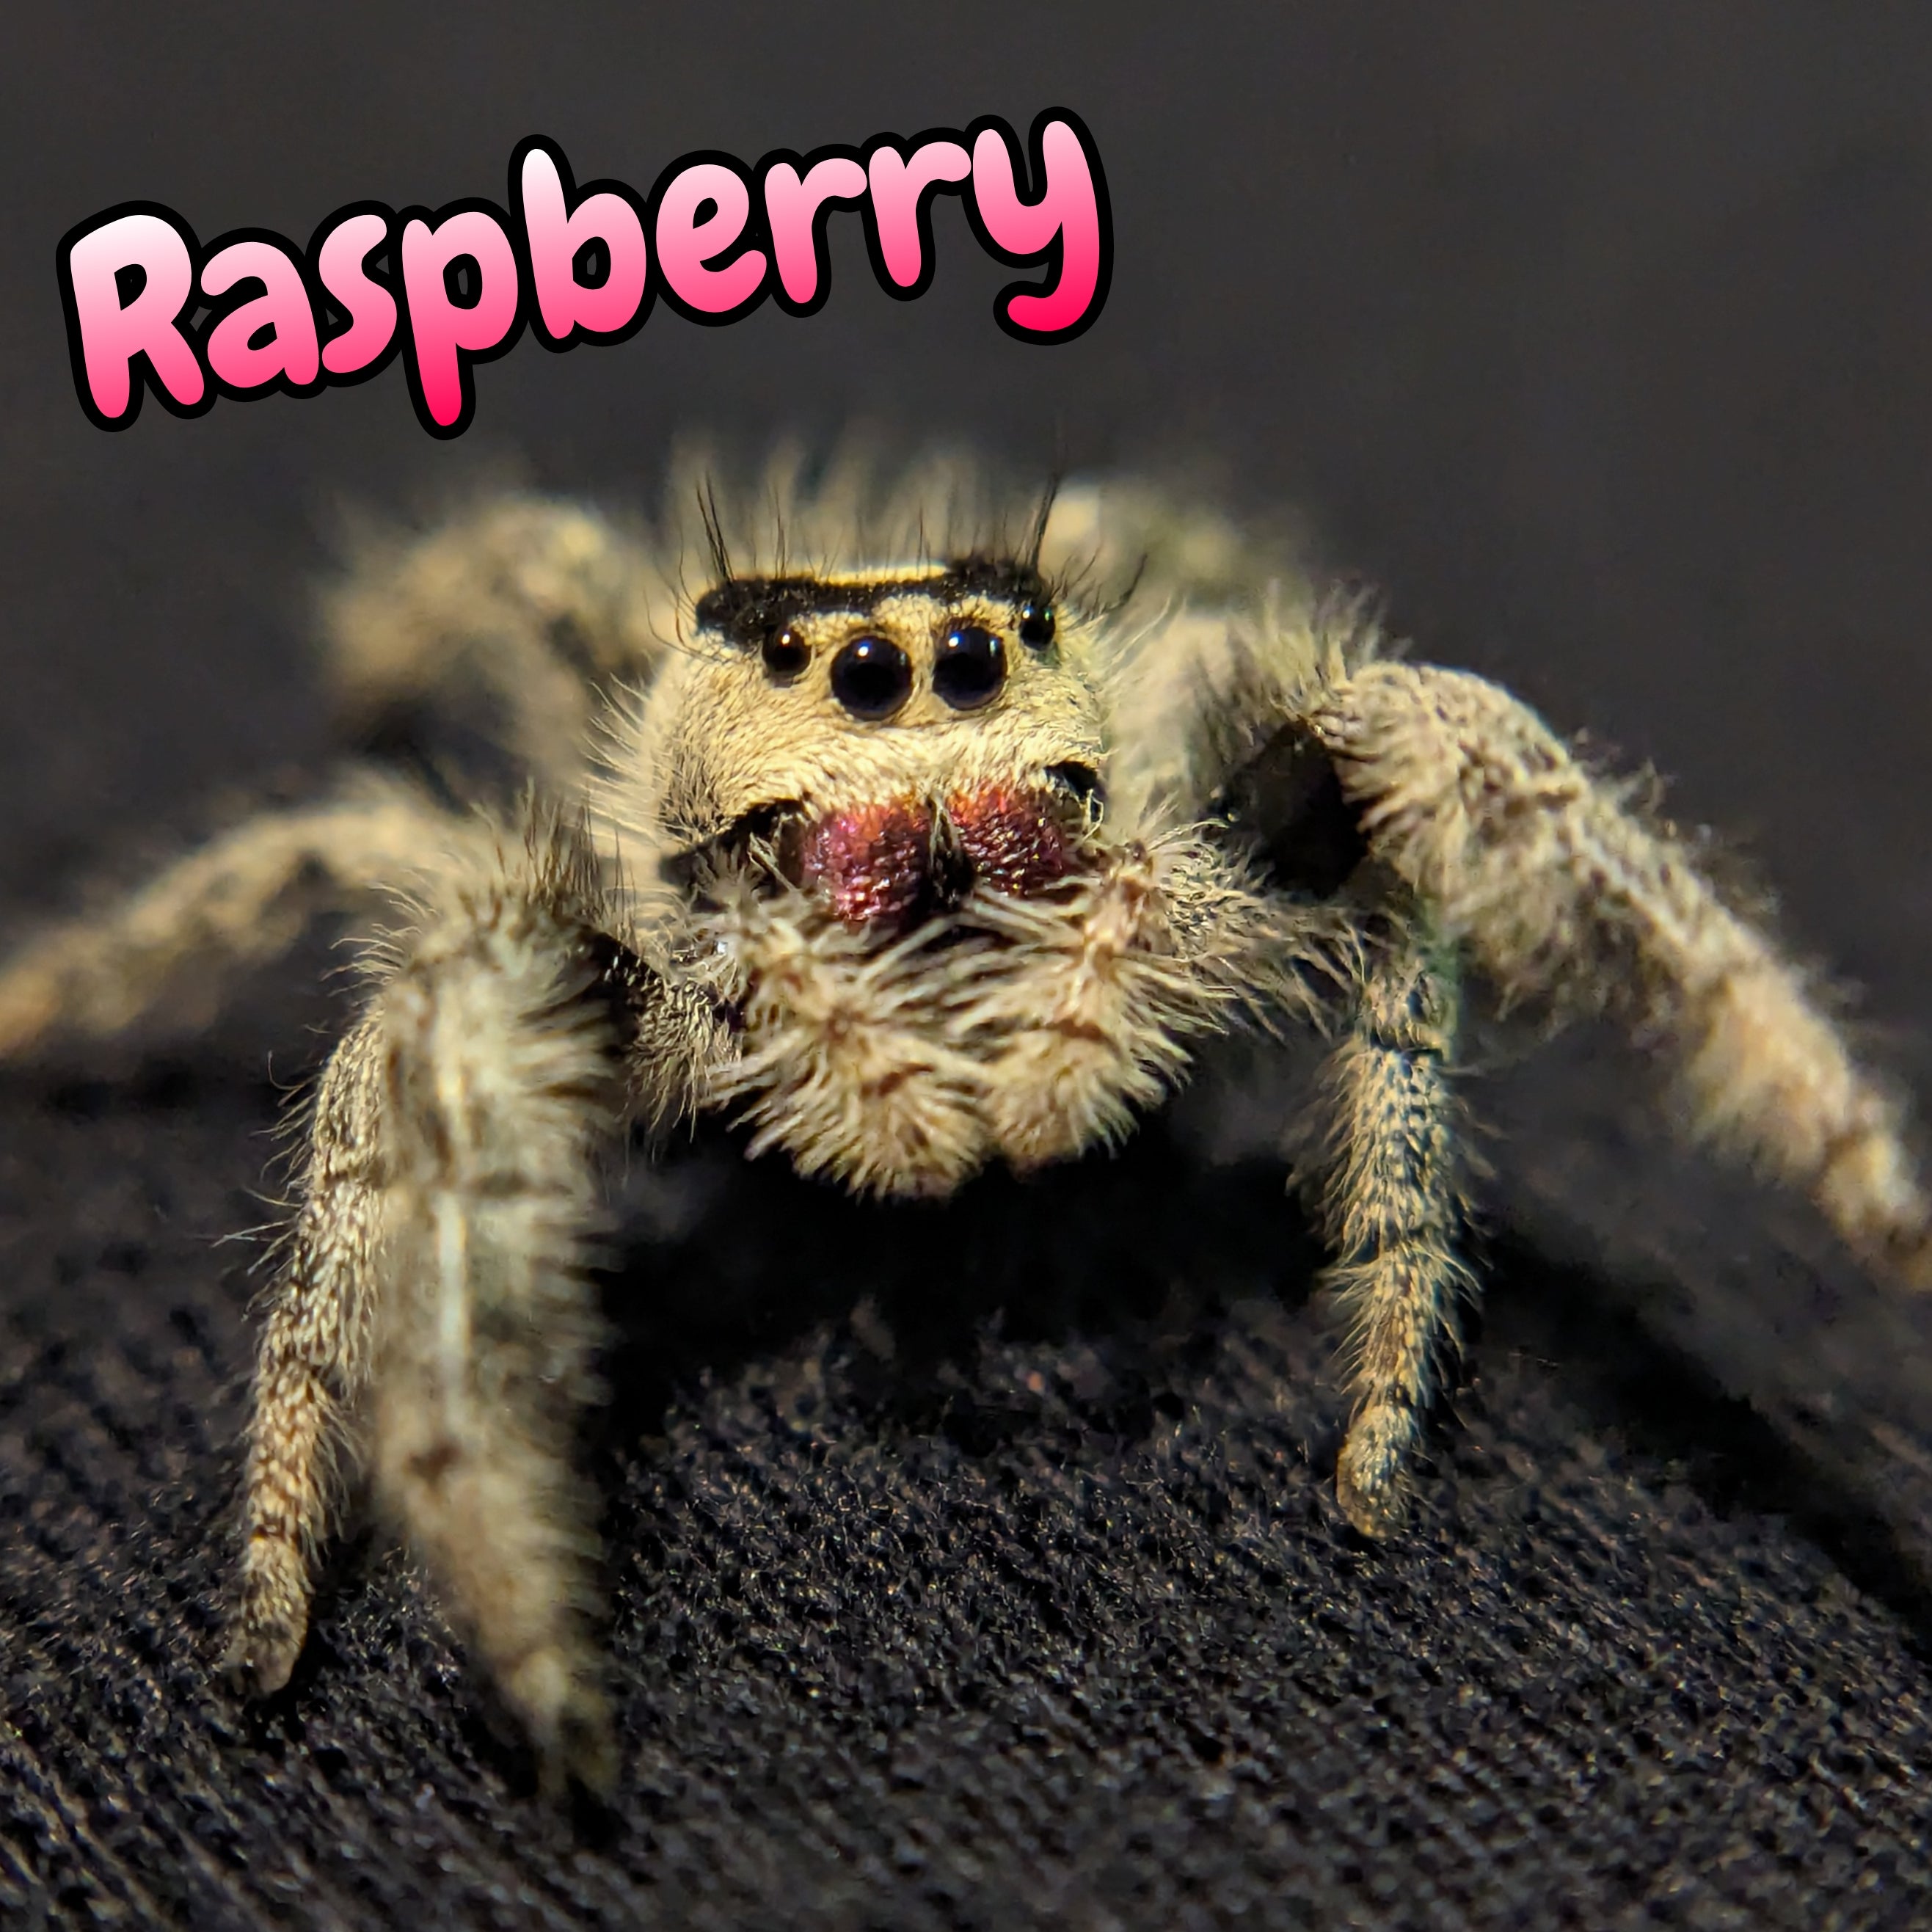 Apalachicola Regal Jumping Spider "Raspberry"